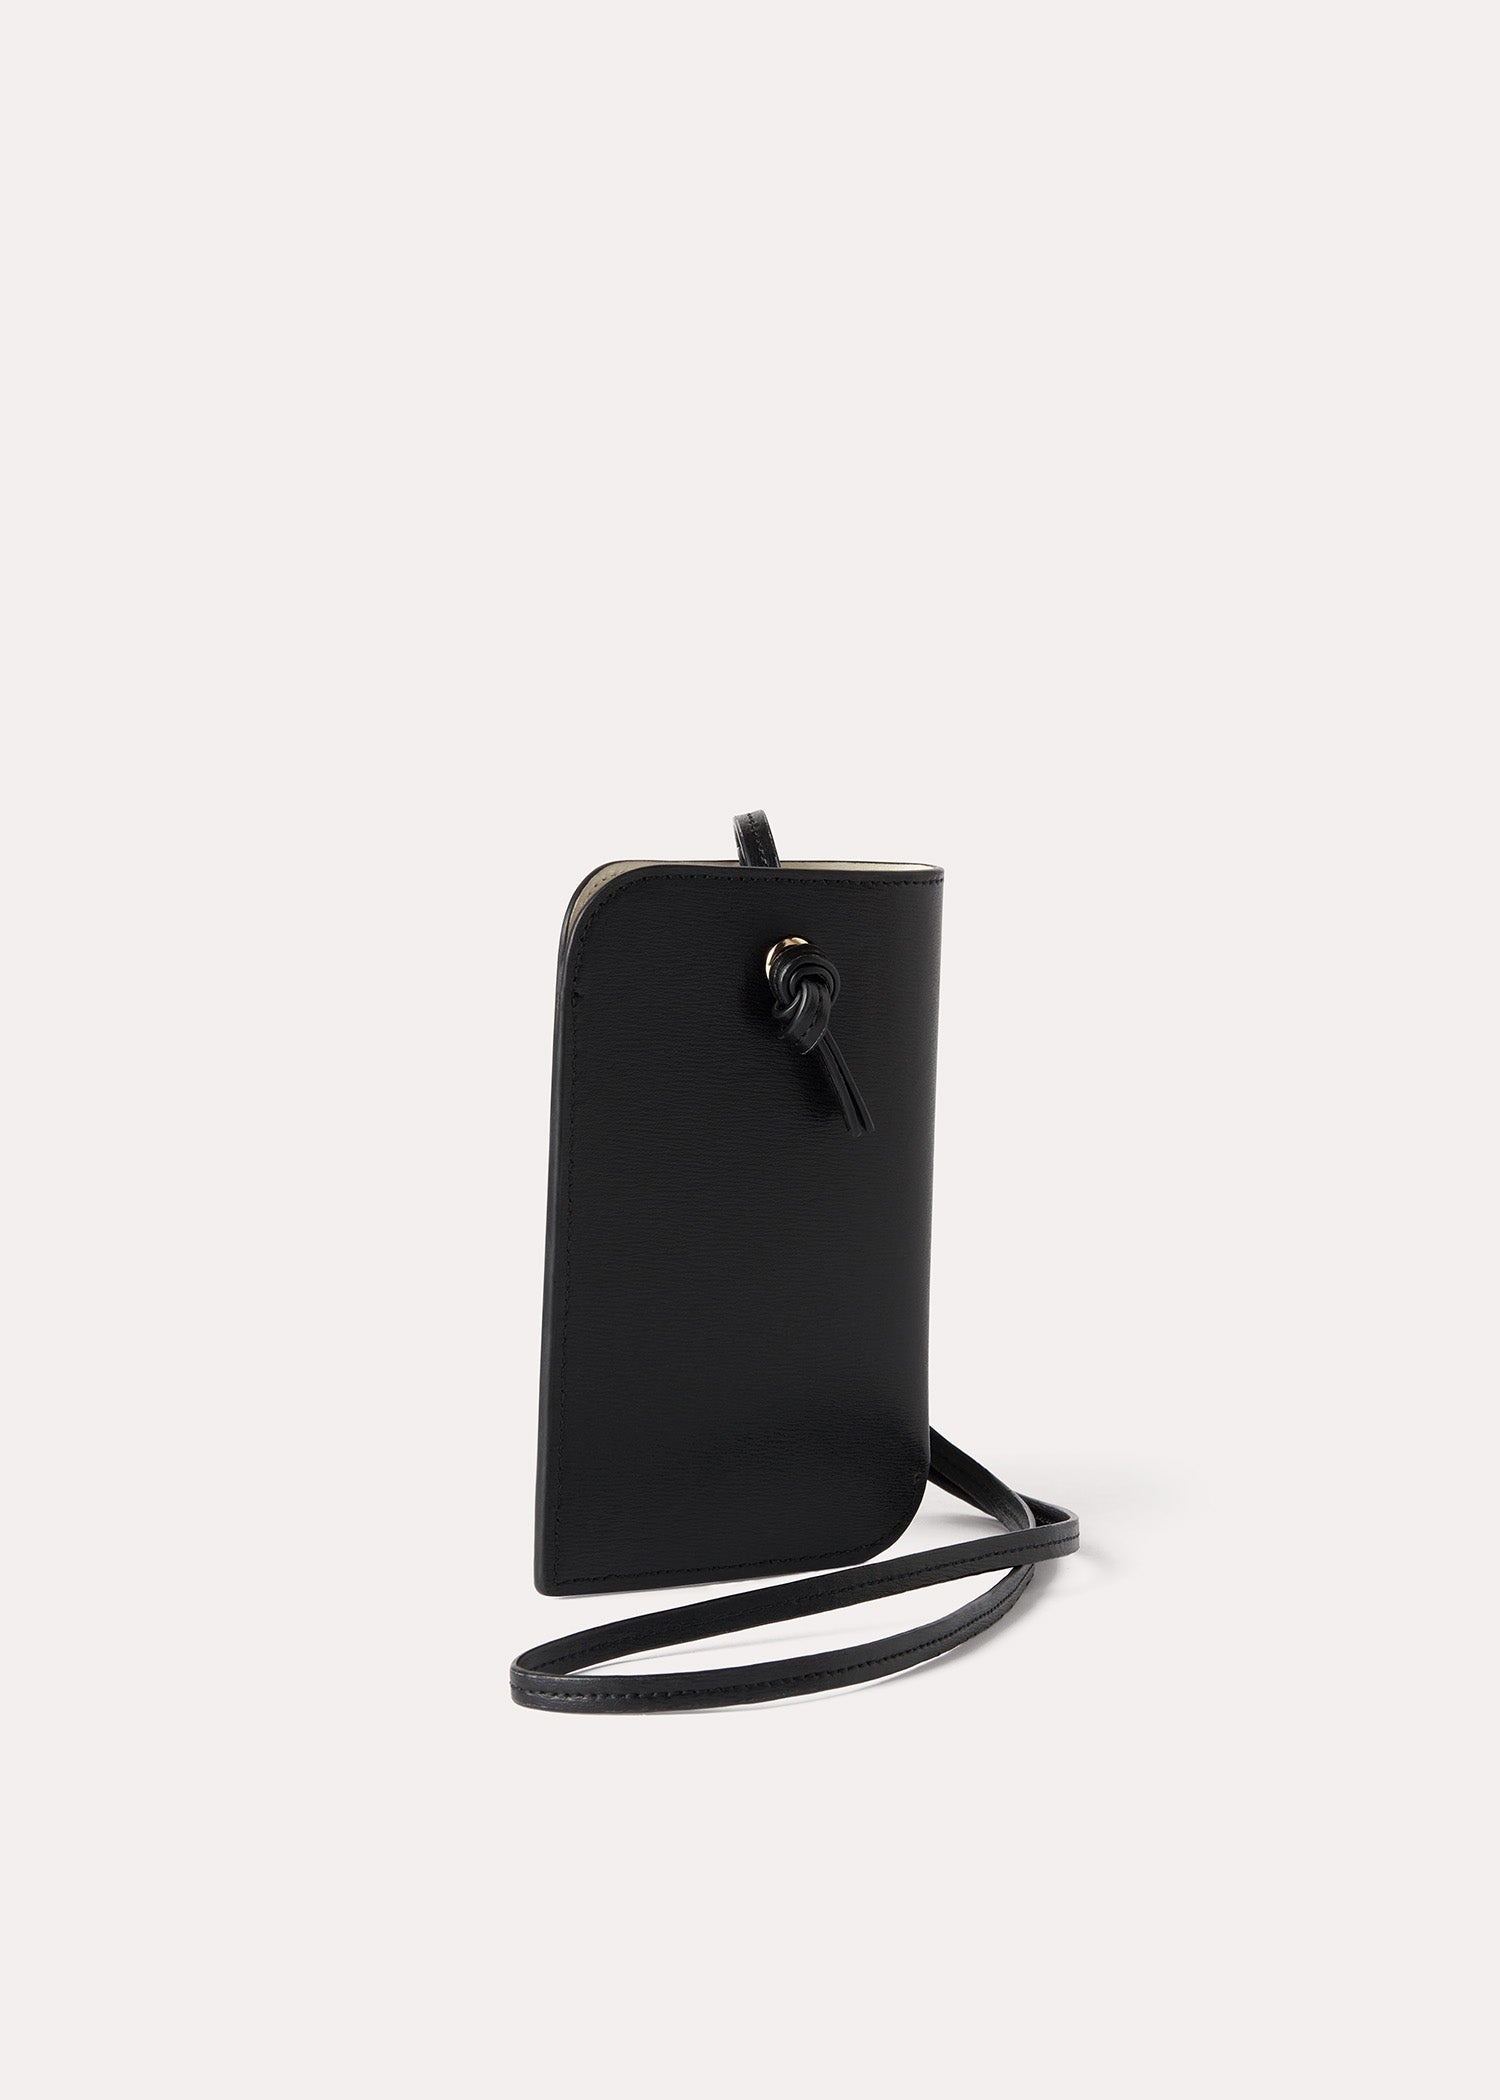 Pocket leather pouch black - 4